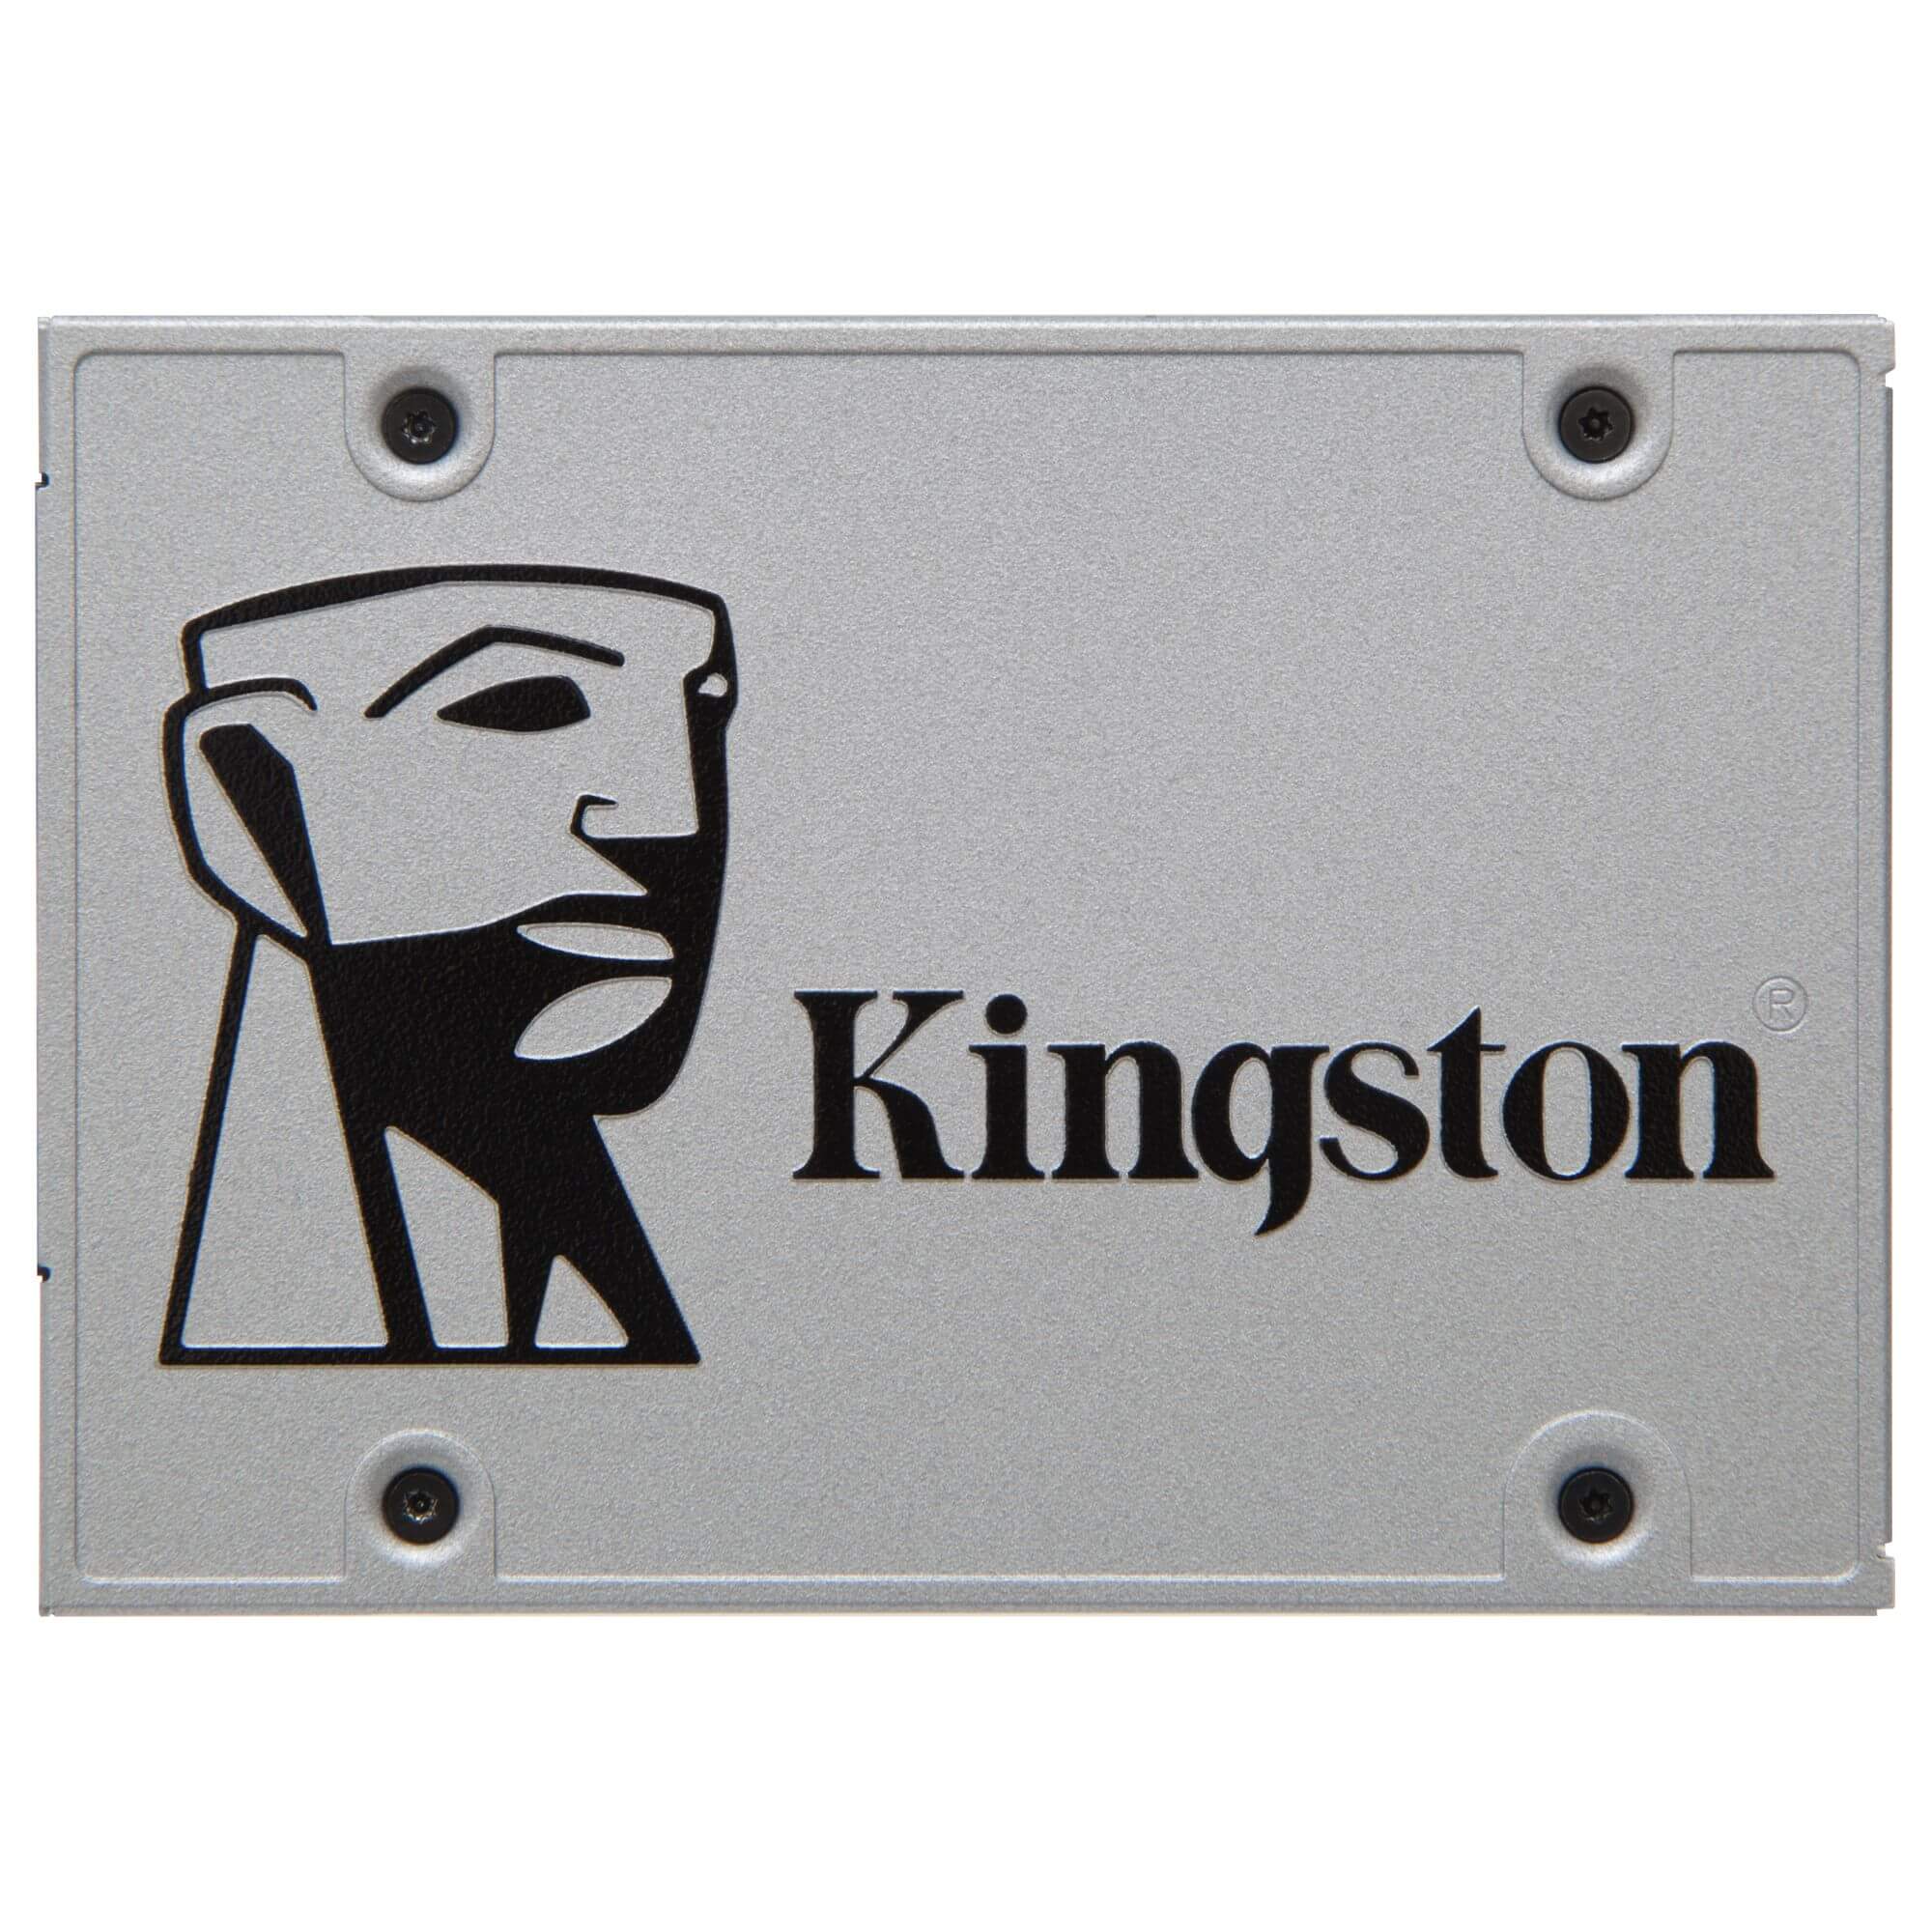  SSD Kingston SSDNow UV400, 240GB, SATA3 